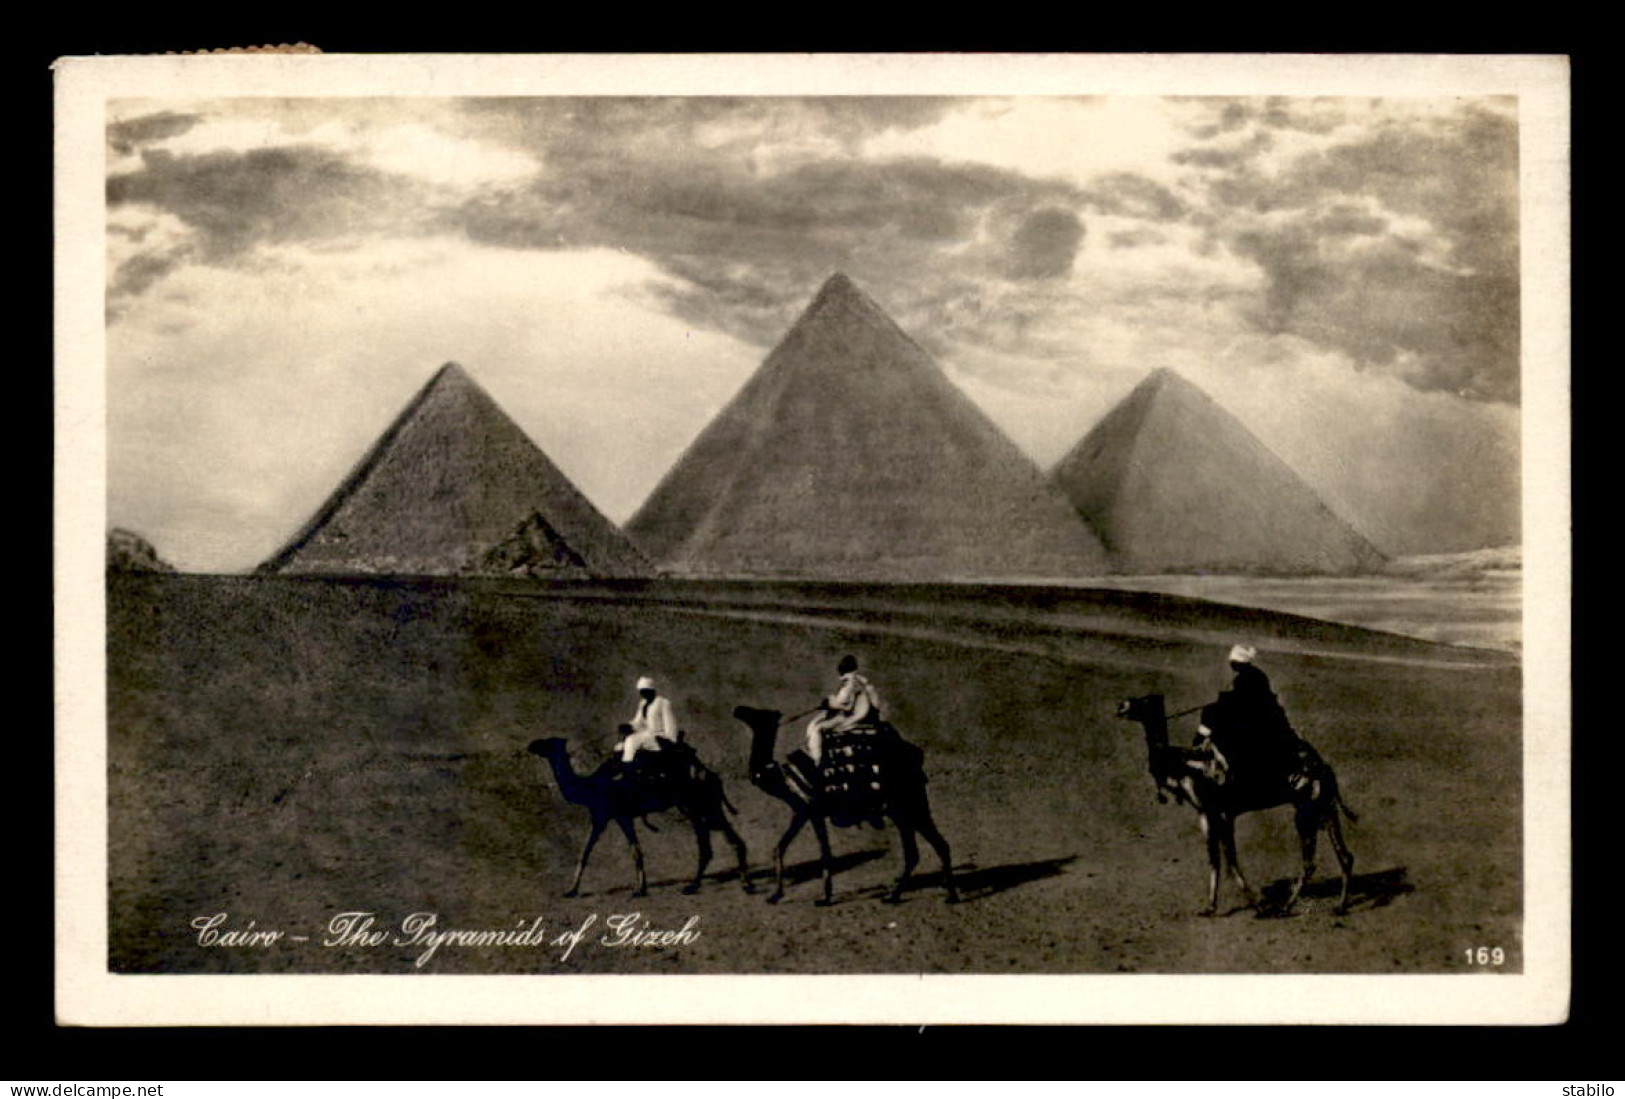 EGYPTE - LENHERT & LANDROCK N°169 - CAIRO - THE PYRAMIDS OF GIZEH - CHAMEAUX - Le Caire